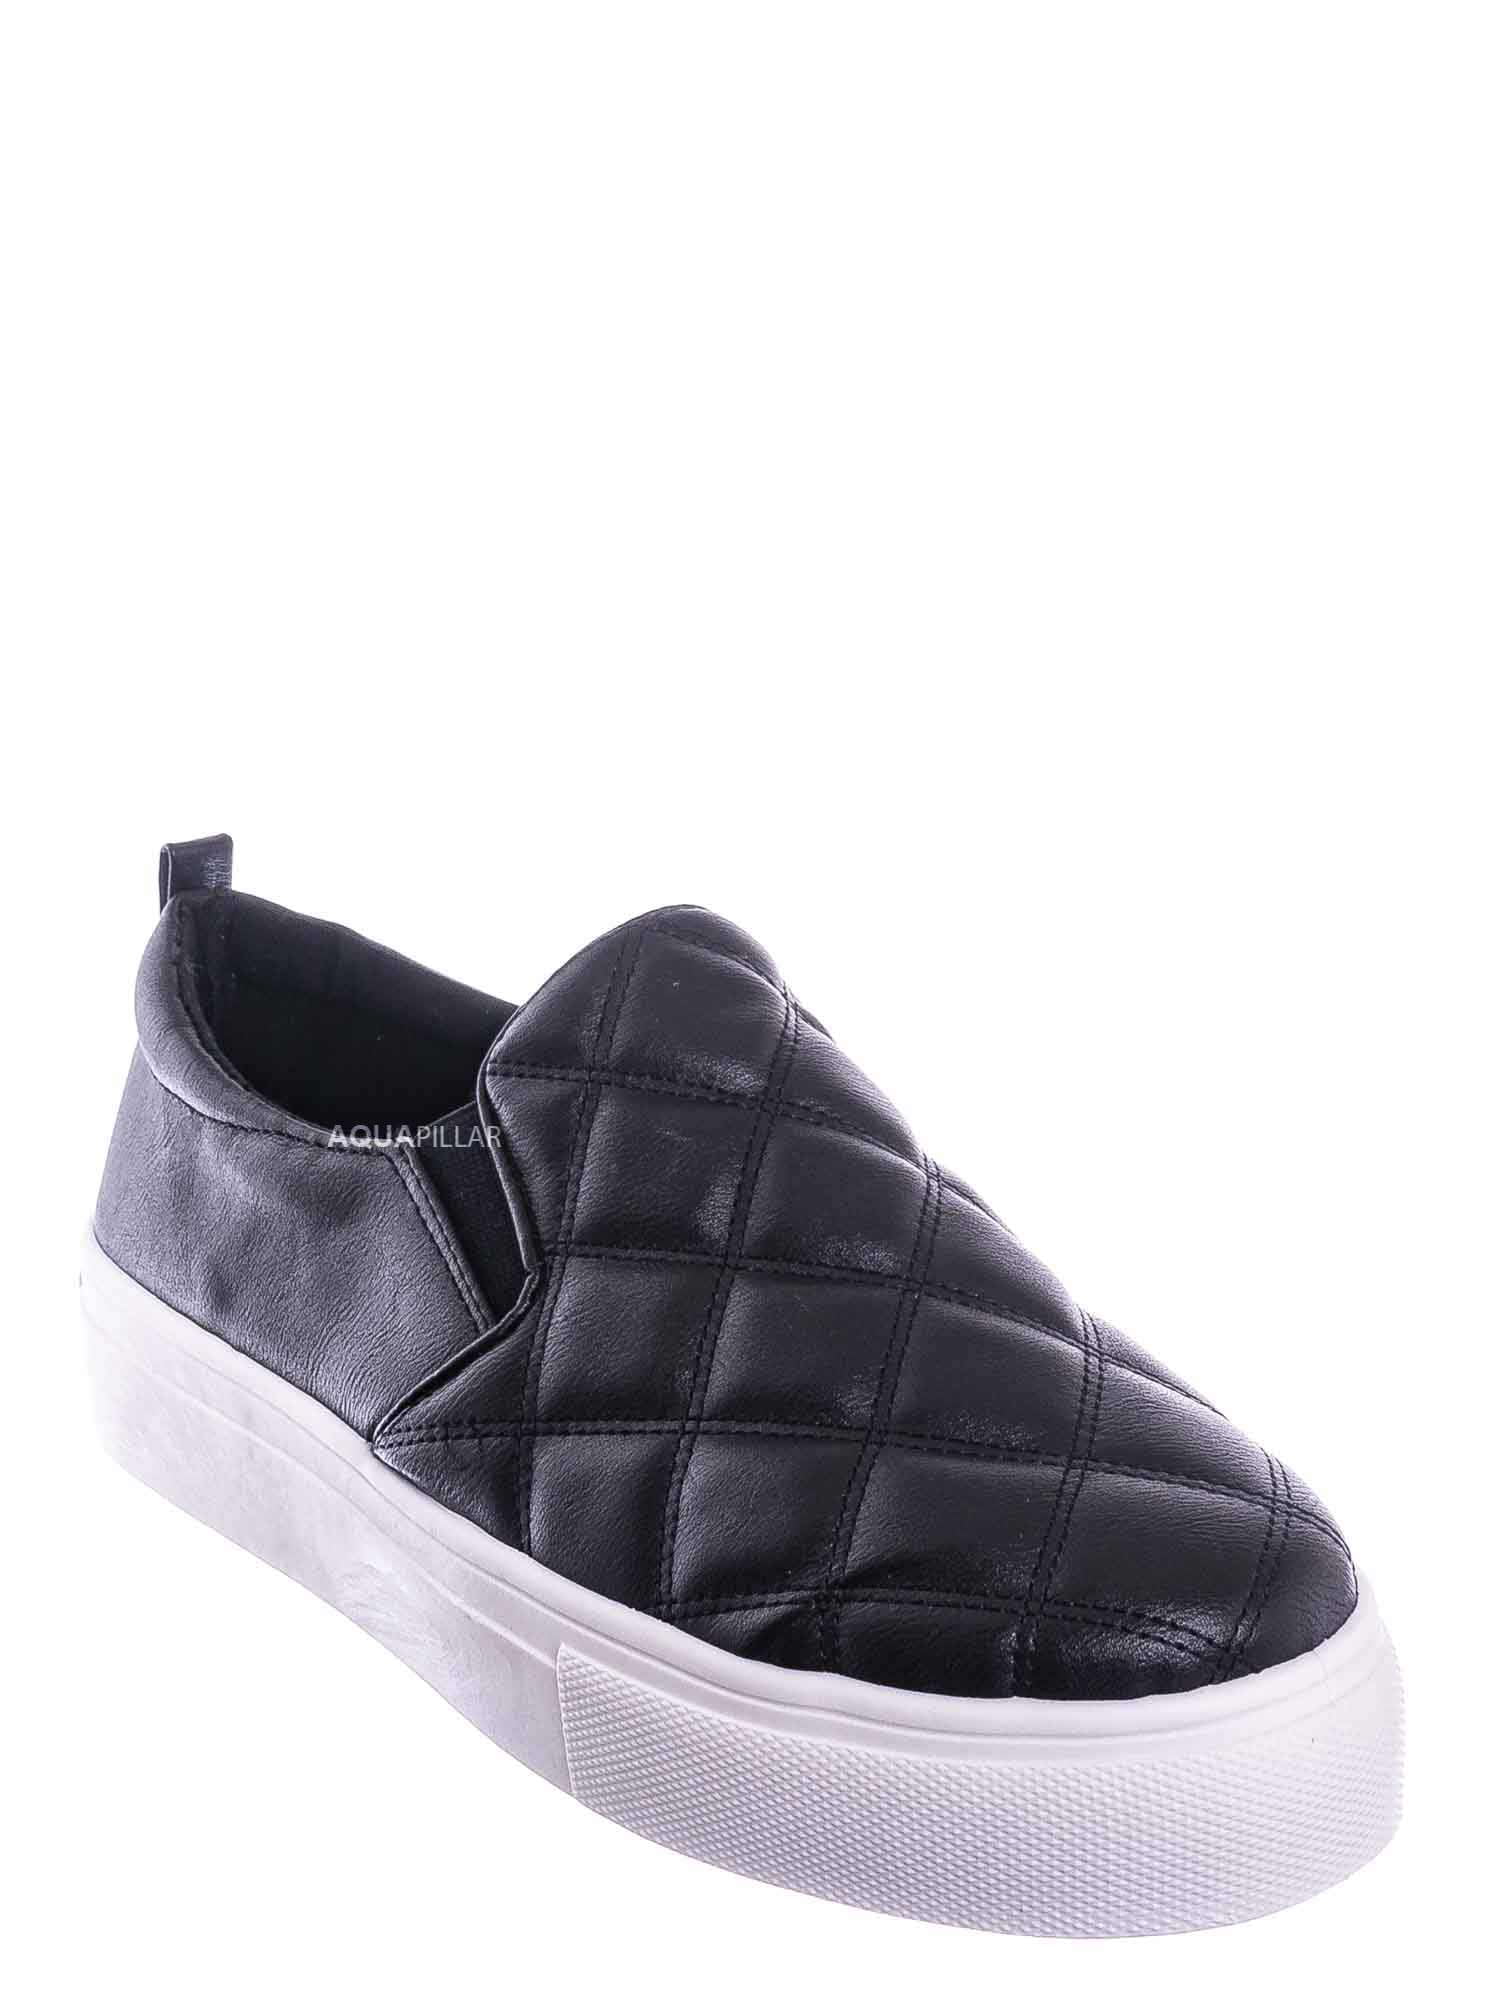 Women's Shoes Bernie Mev Michelle Woven Fashion Sneakers Black *New*